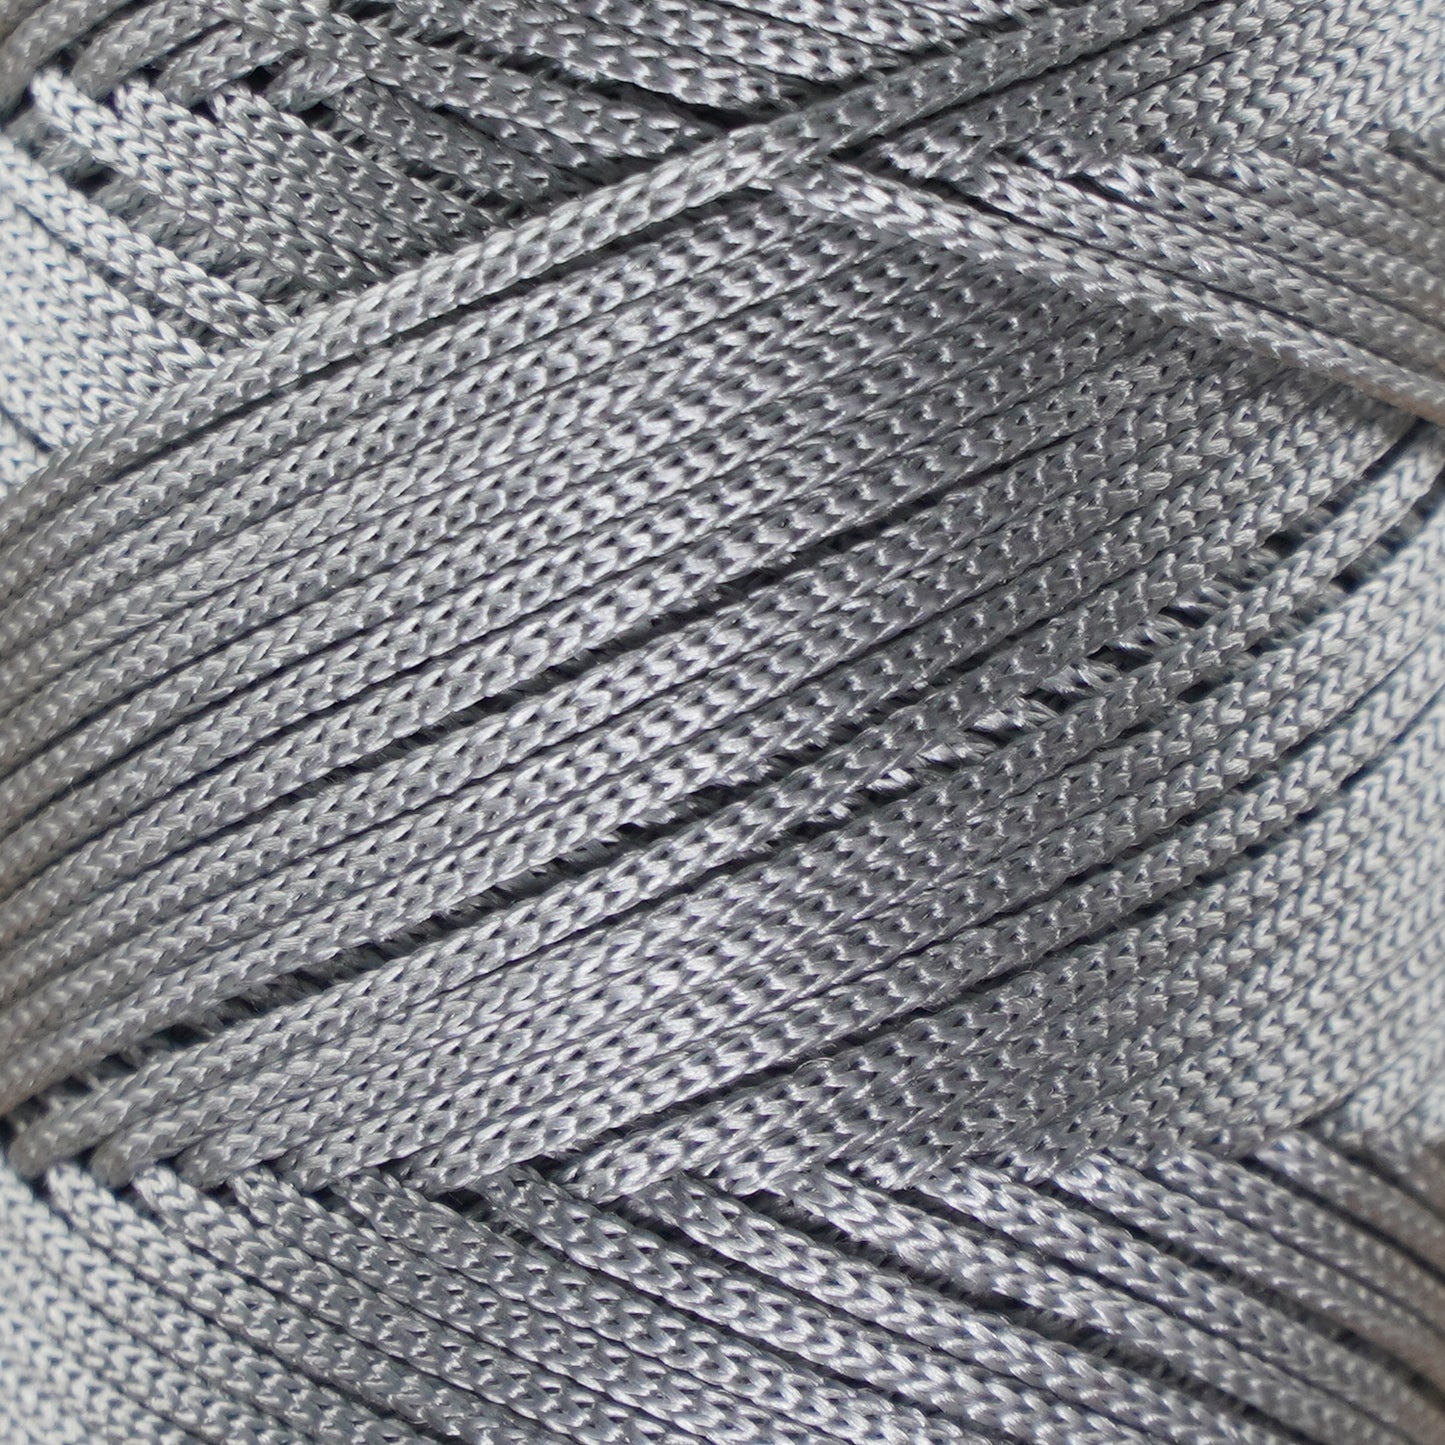 Polyester Macrame Cord 2mm x 250 yards (750 feet)  - Light Grey